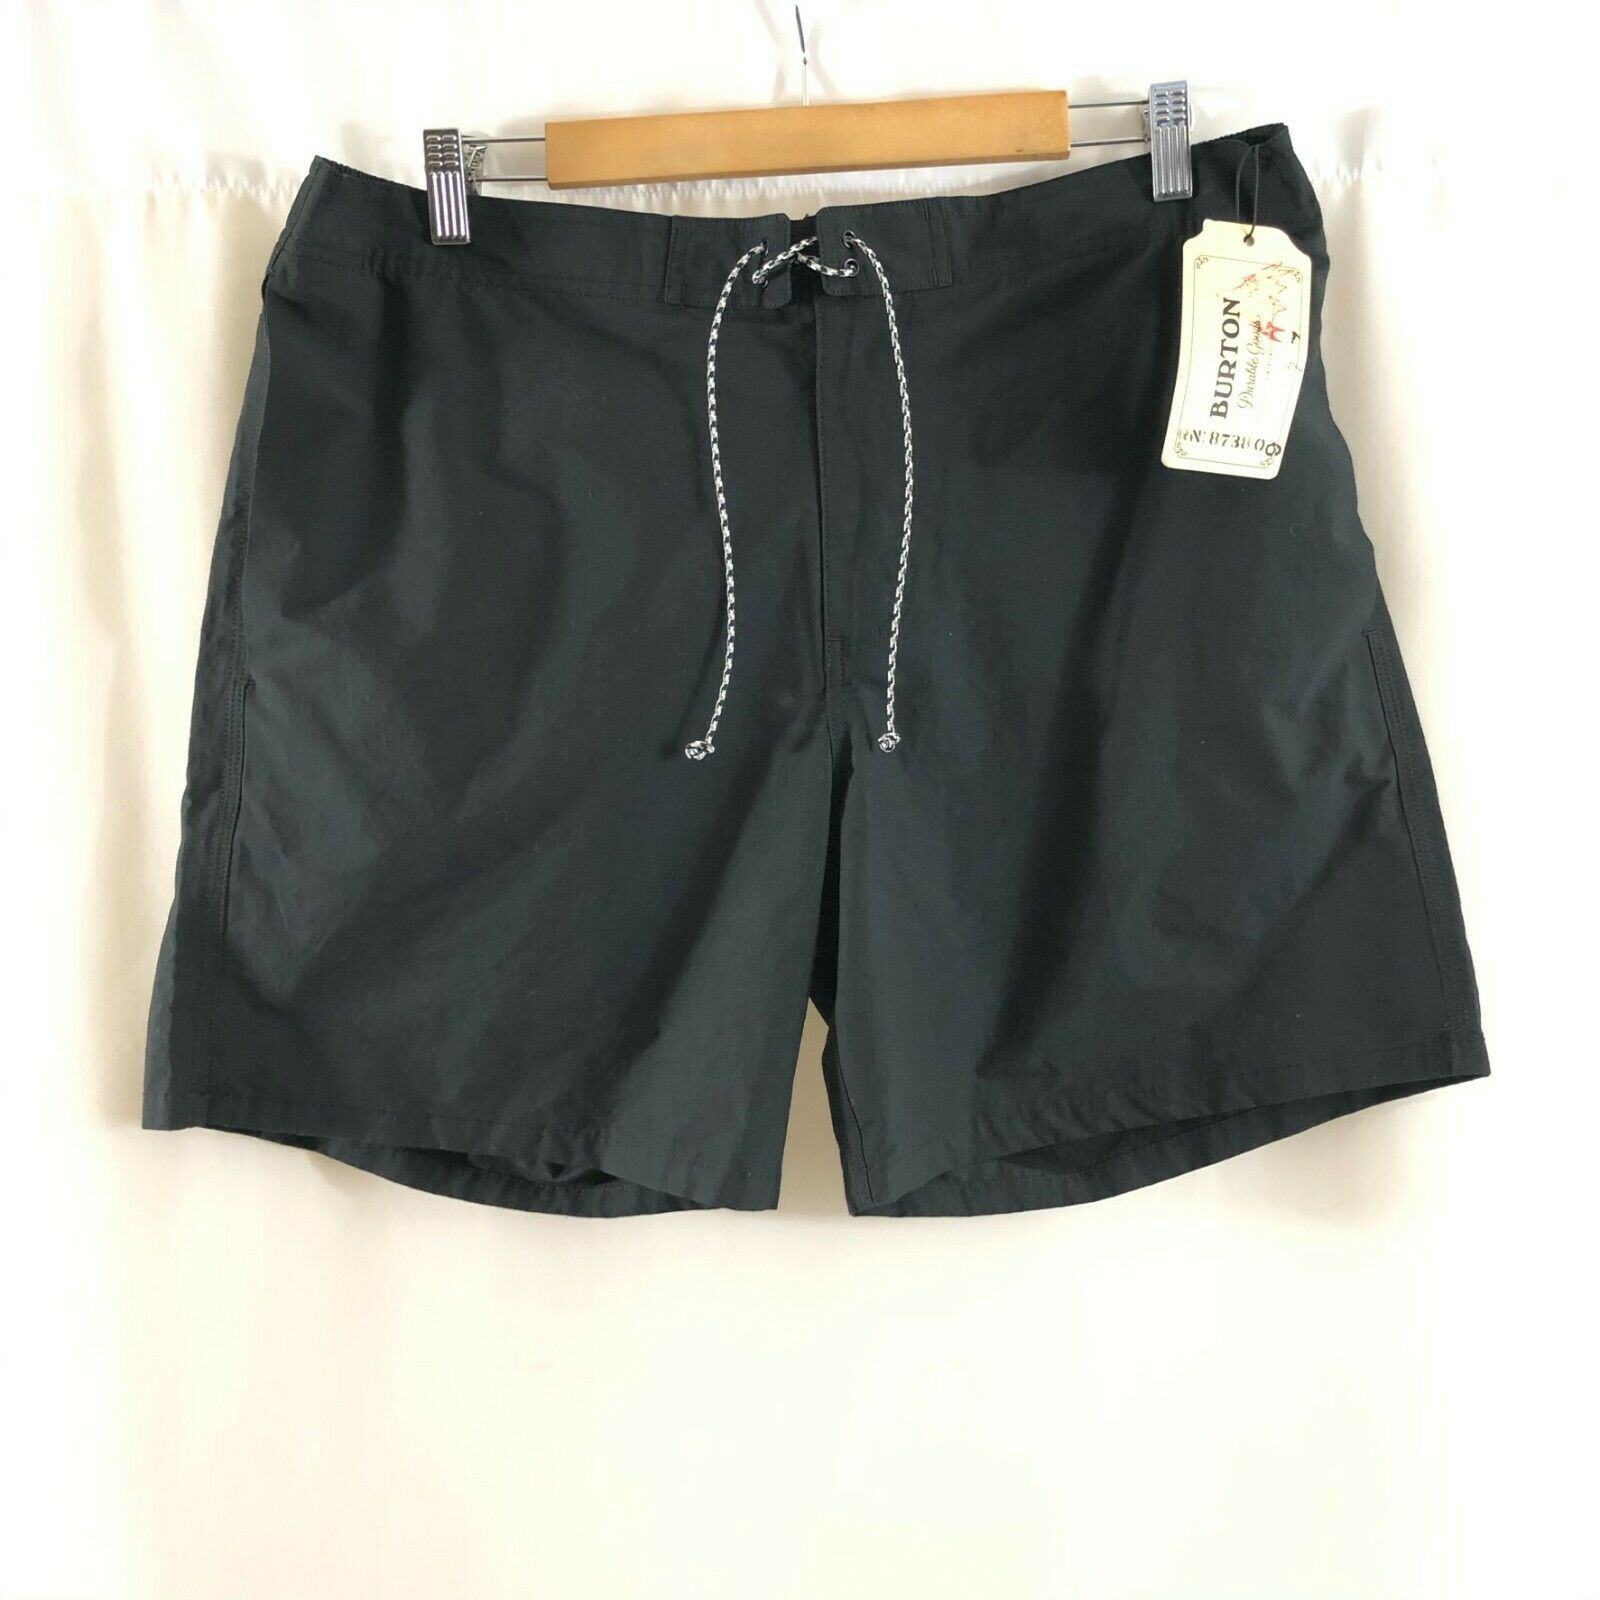 Burton Mens Board Shorts Elastic Waist Lace Up Pocket Black Size 36 - $24.18